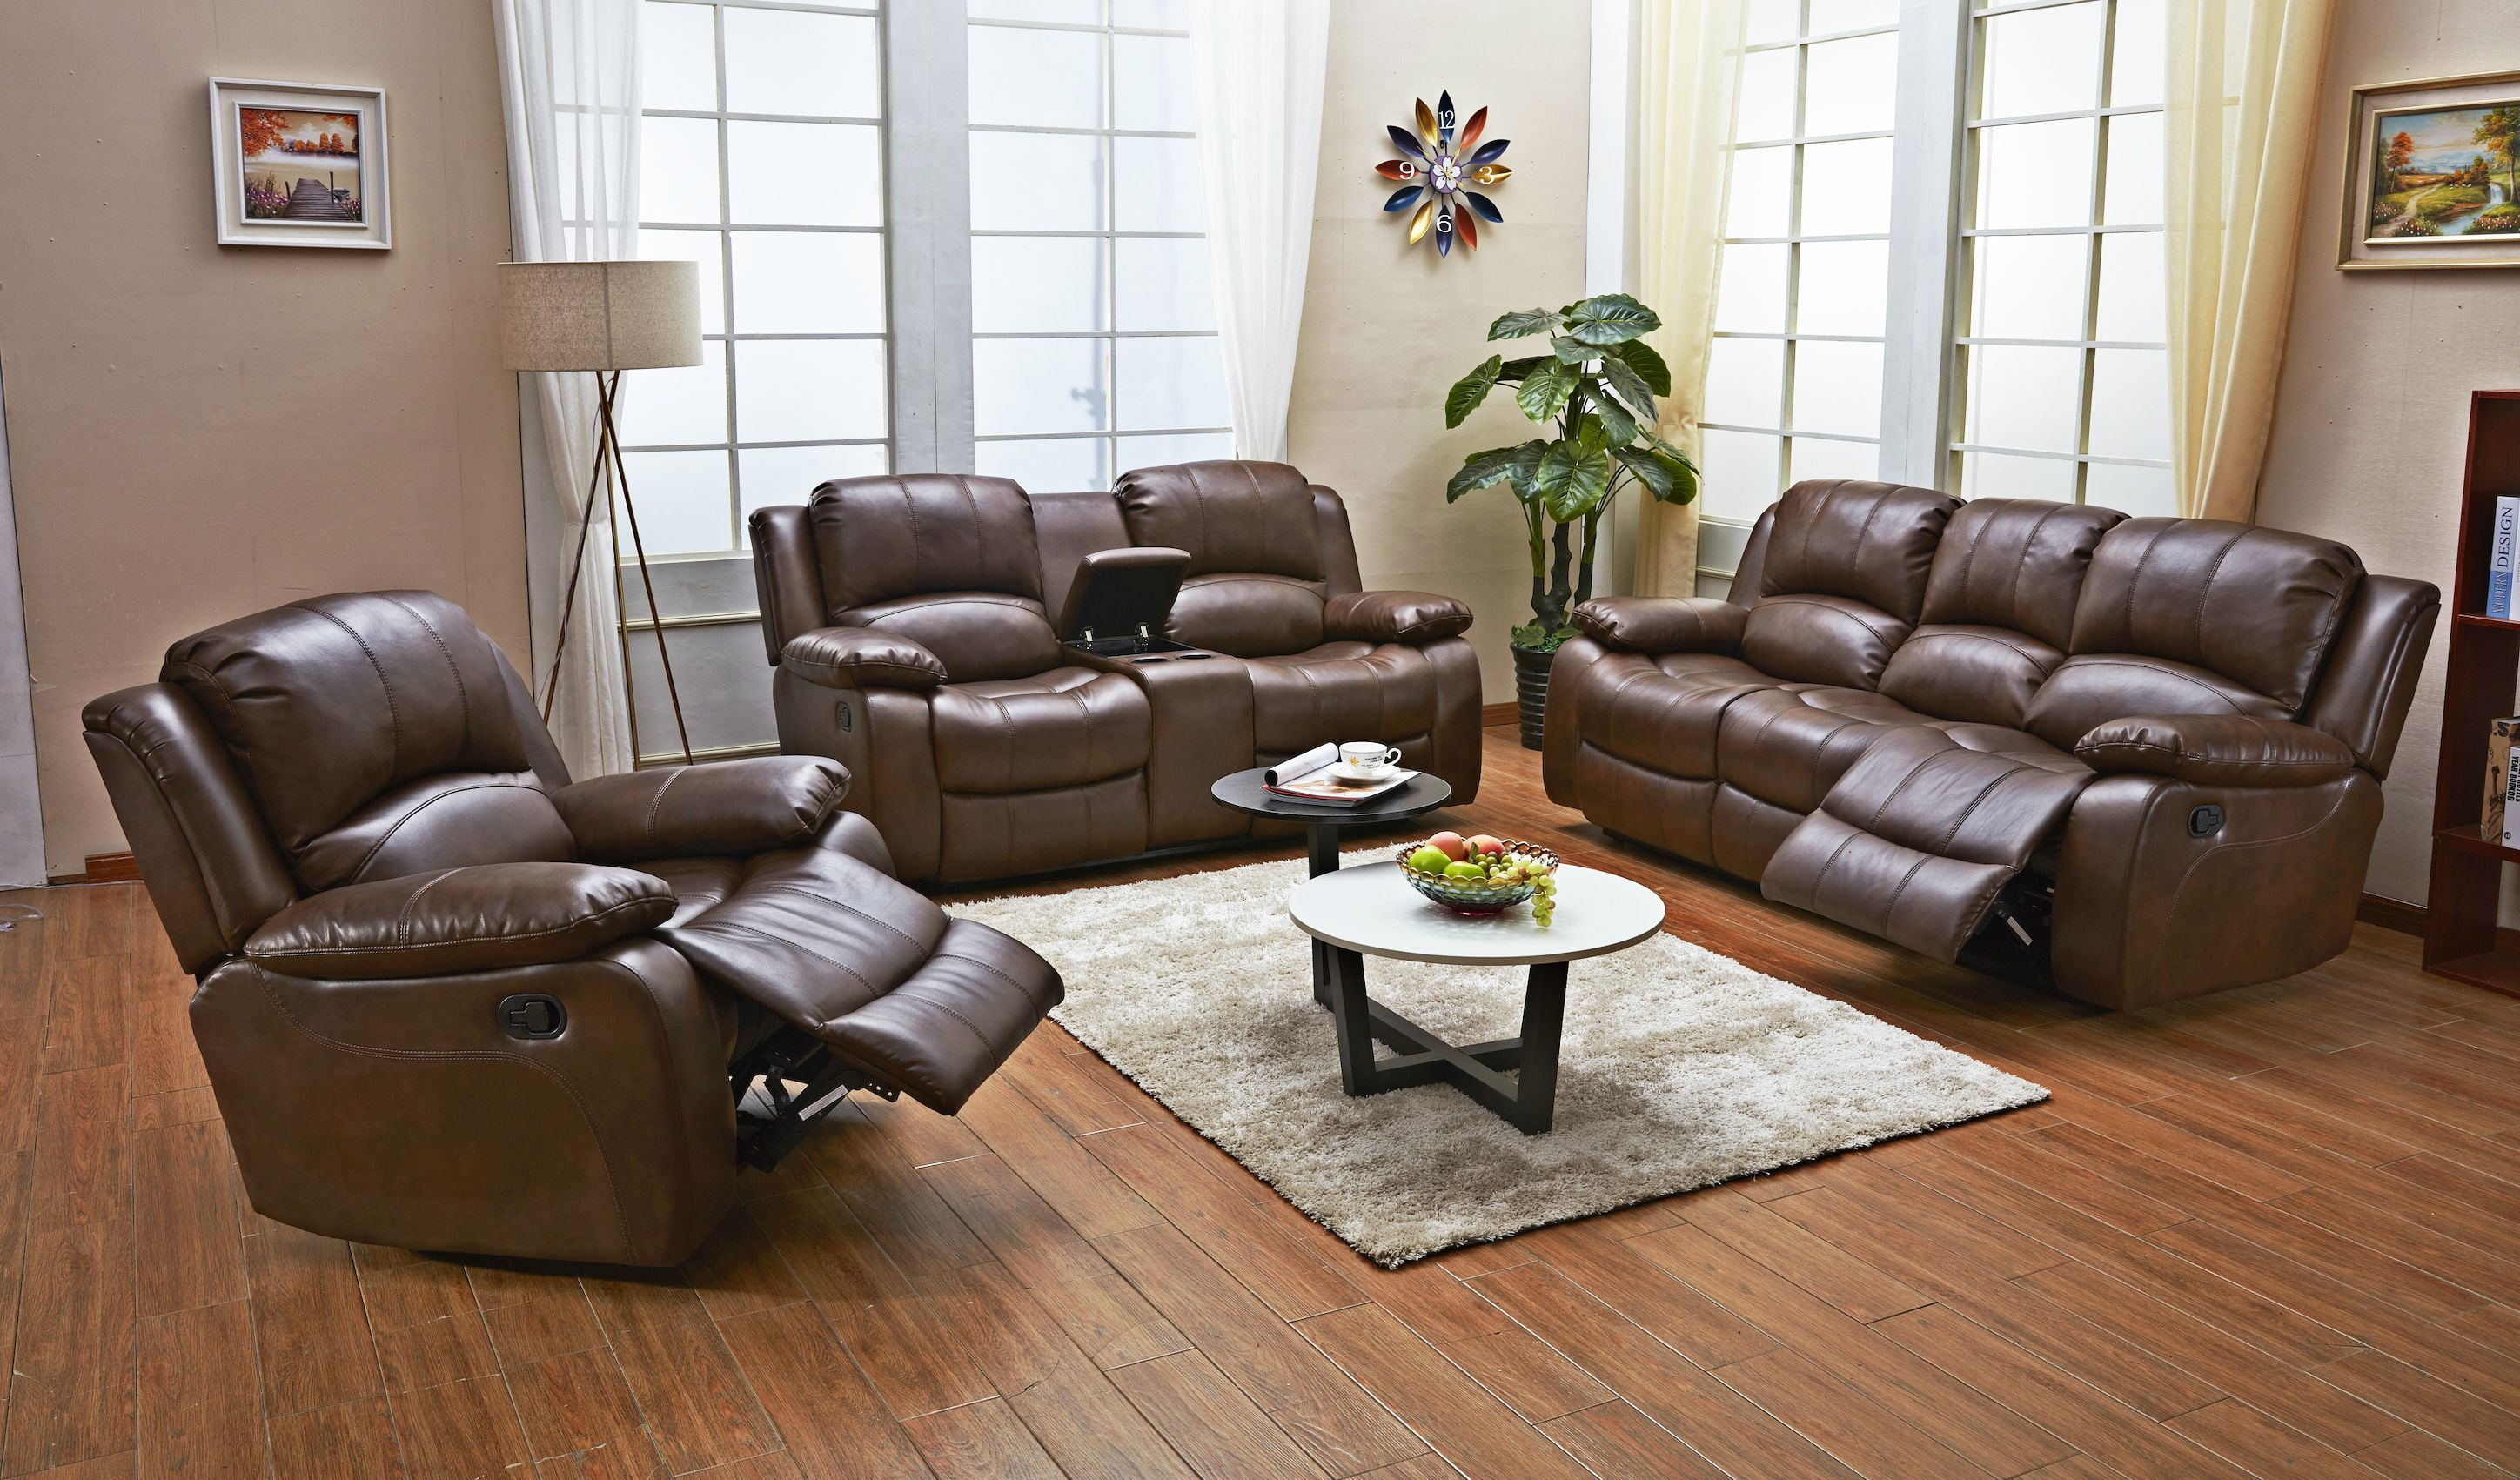 B Furniture Bonded Leather, Leather Recliner Furniture Sets